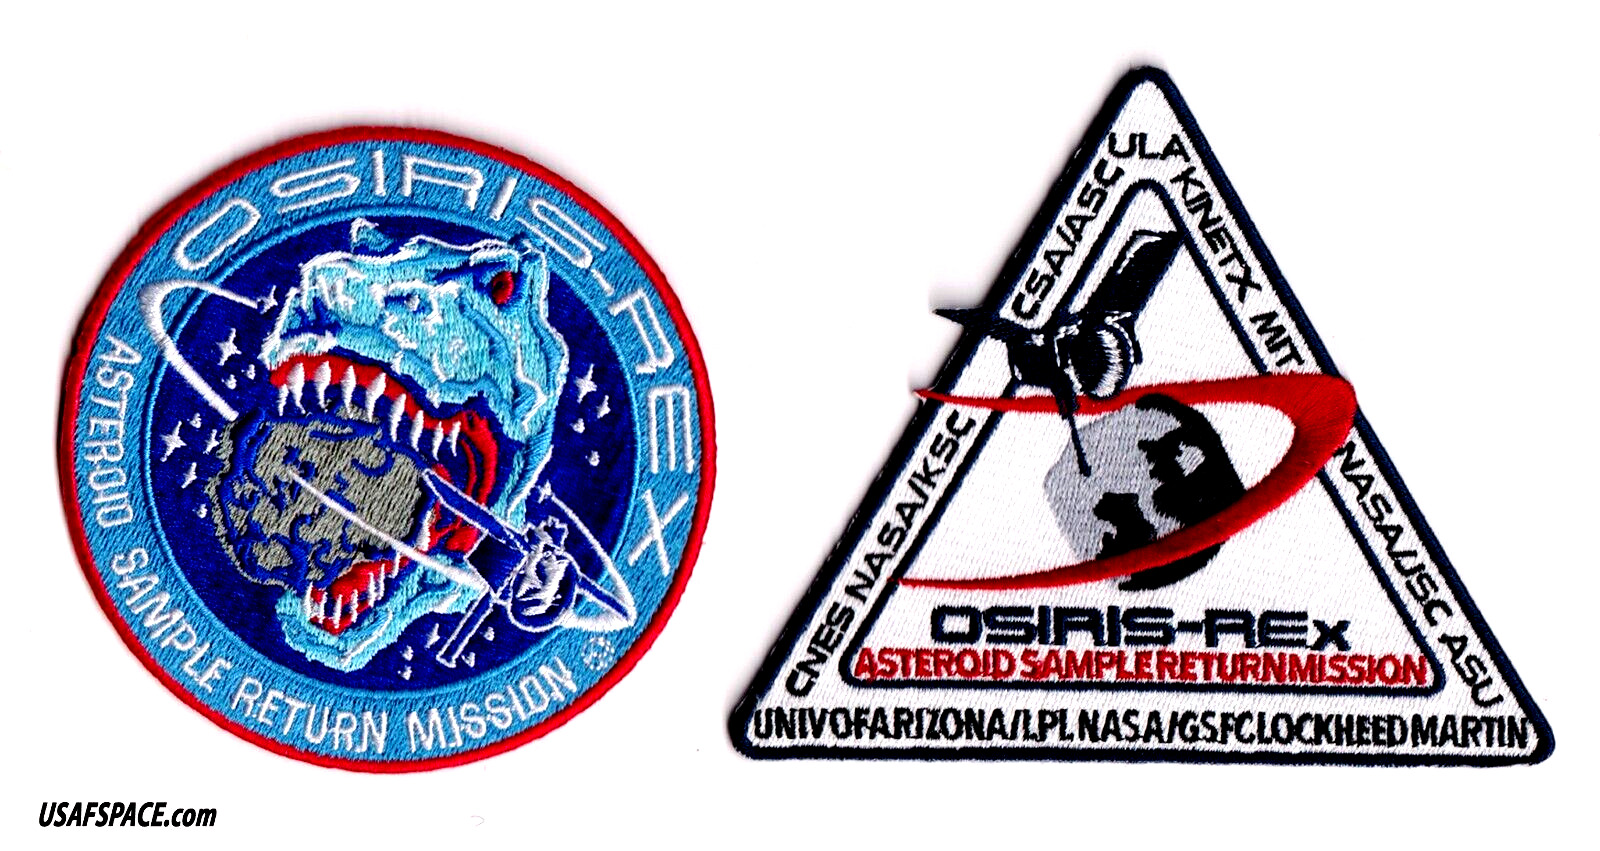 OSIRIS-REX-ASTEROID SAMPLE RETURN MISSION-CNES-NASA GSFC SPACE Mission PATCH SET